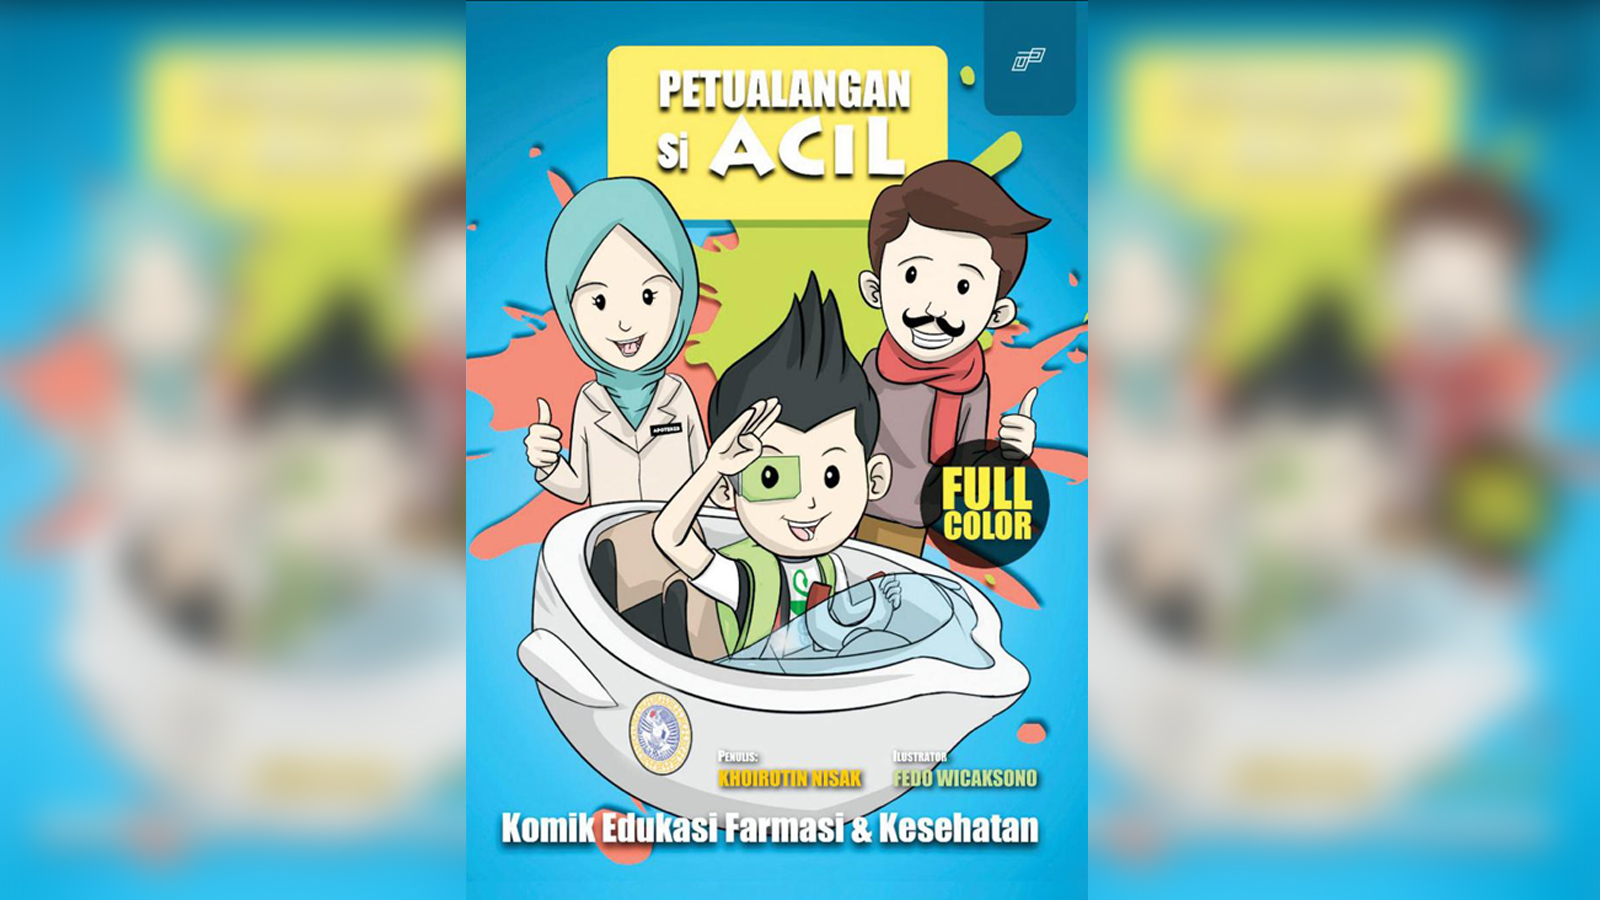 Read more about the article Dosen Farmasi UNAIR Ciptakan Komik Petualangan Si Acil Sebagai Media Edukasi Anak